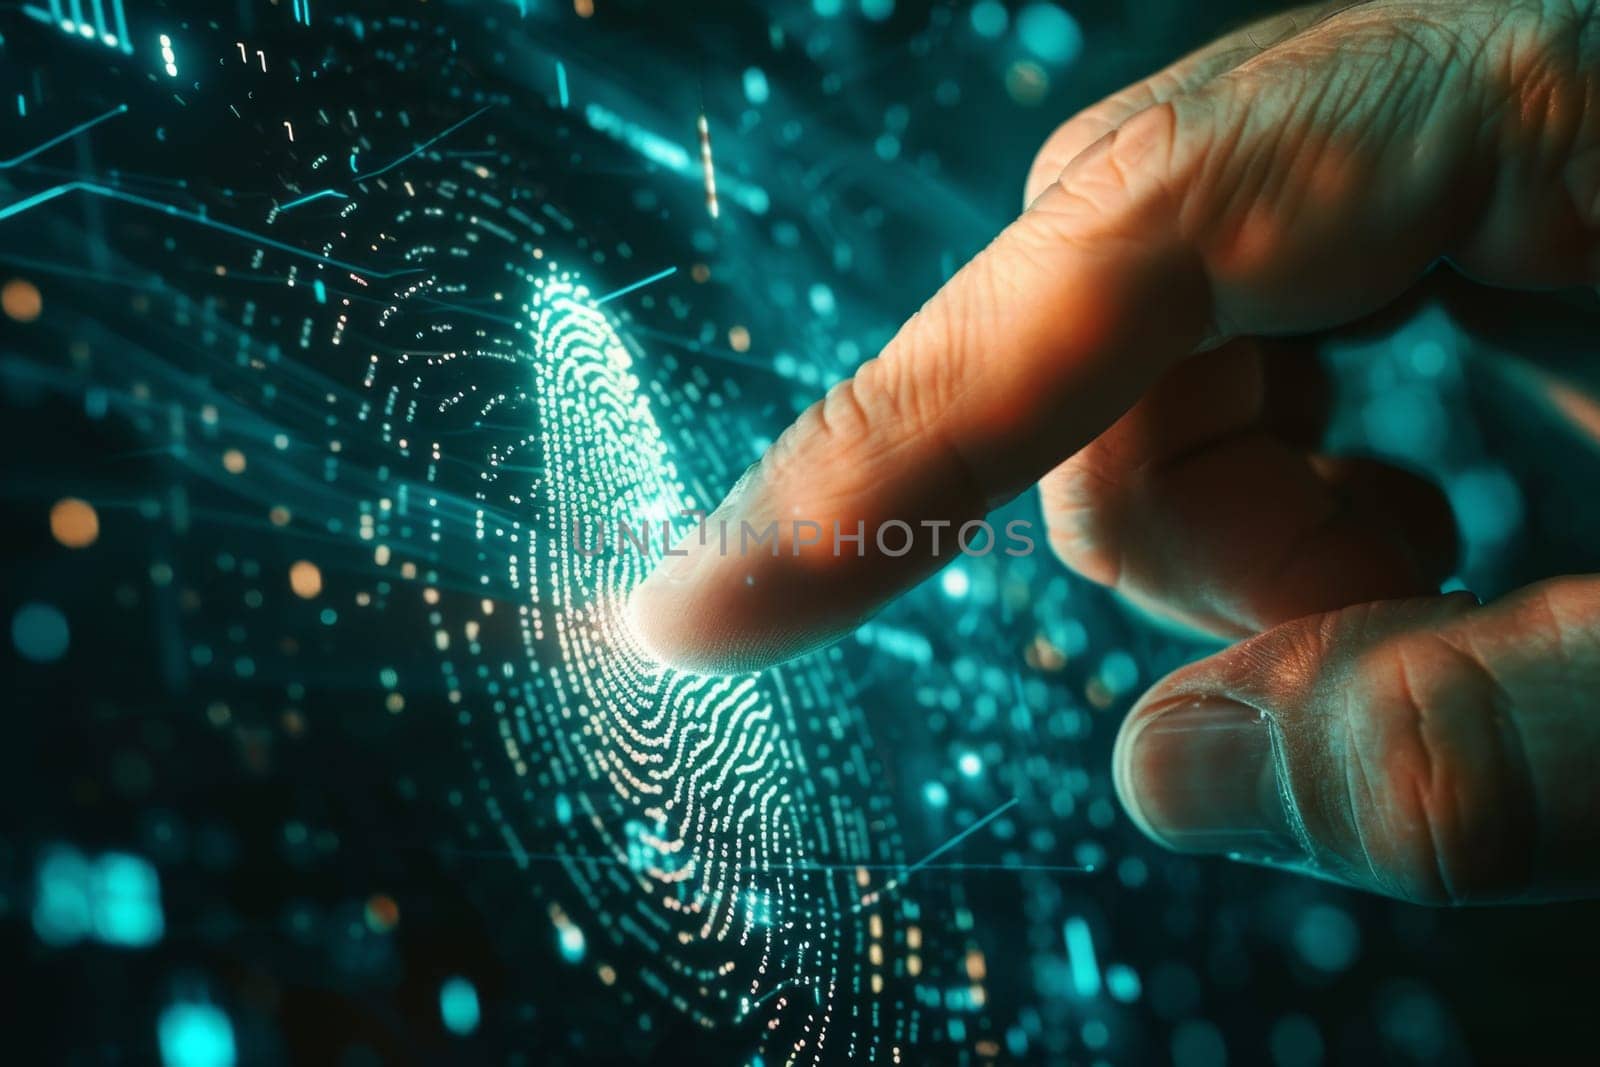 Human fingerprint scanning and biometric authentication. Future technologies and cybernetics.